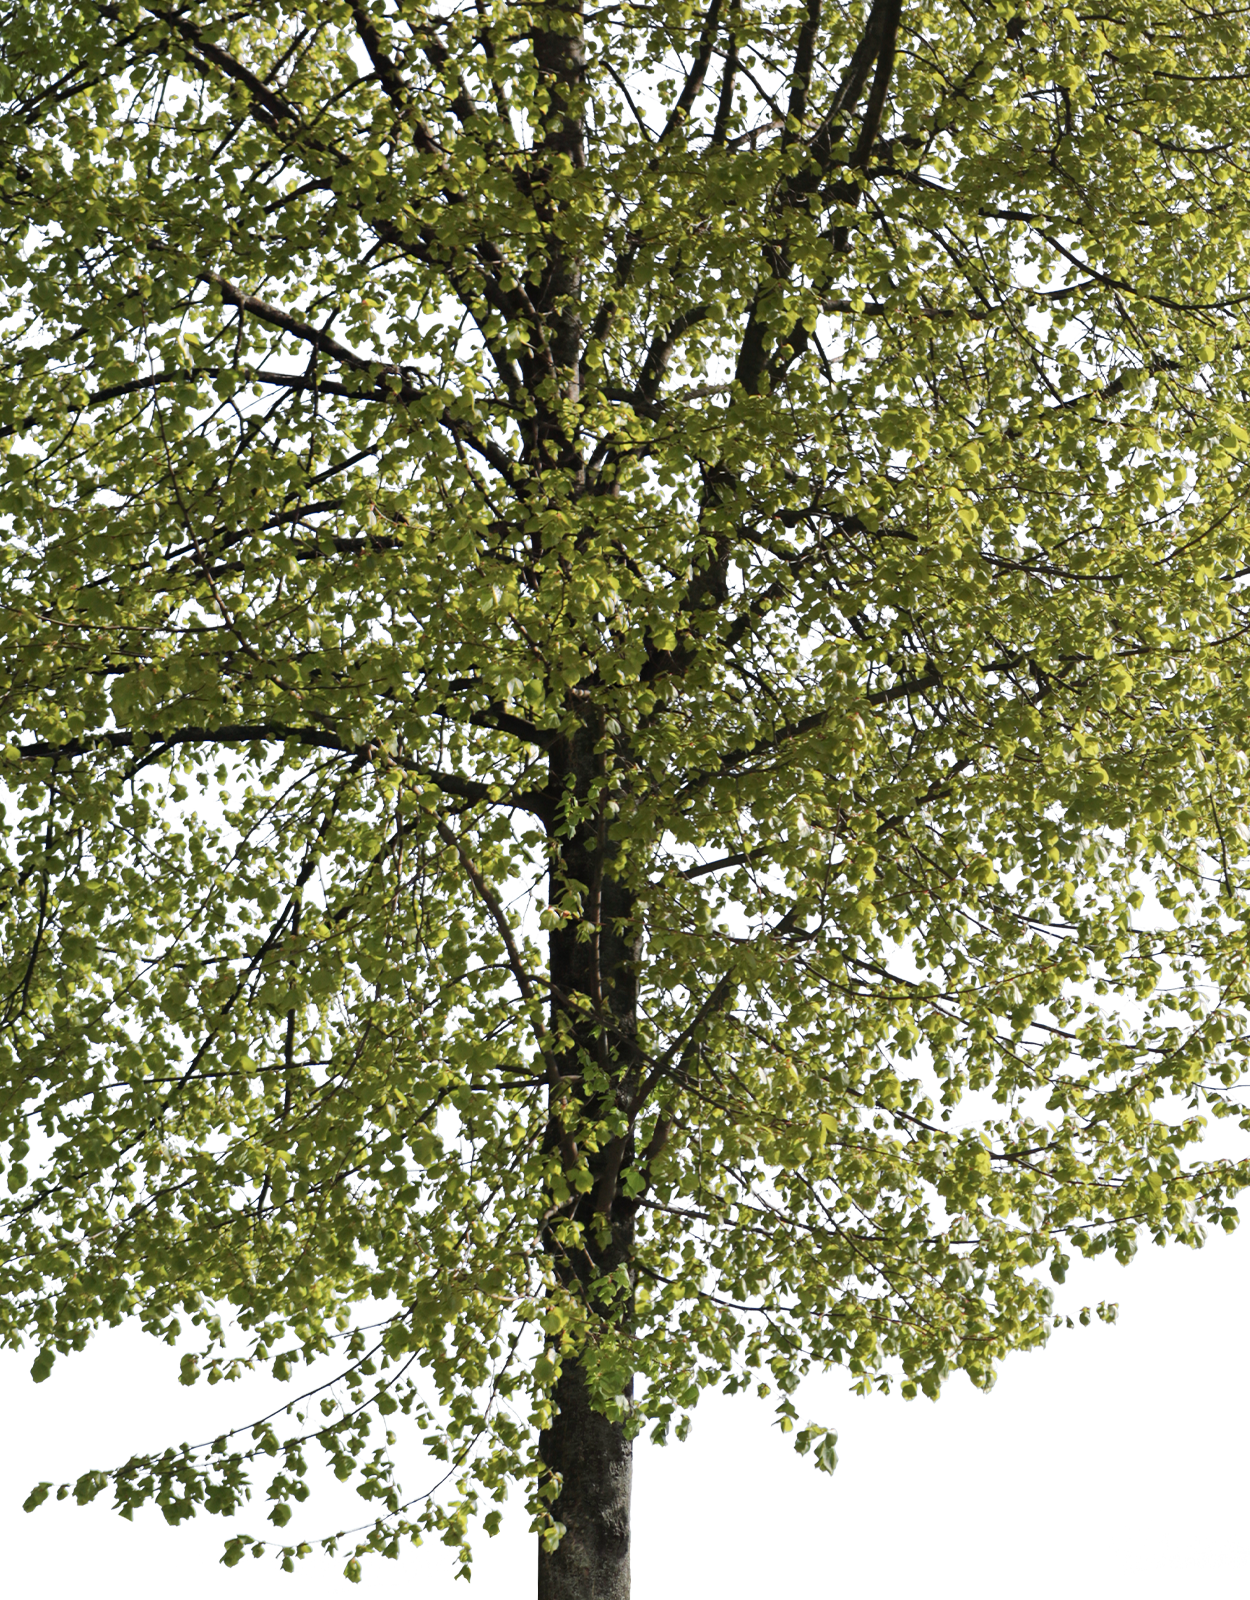 Tila cordata m04 - cutout trees